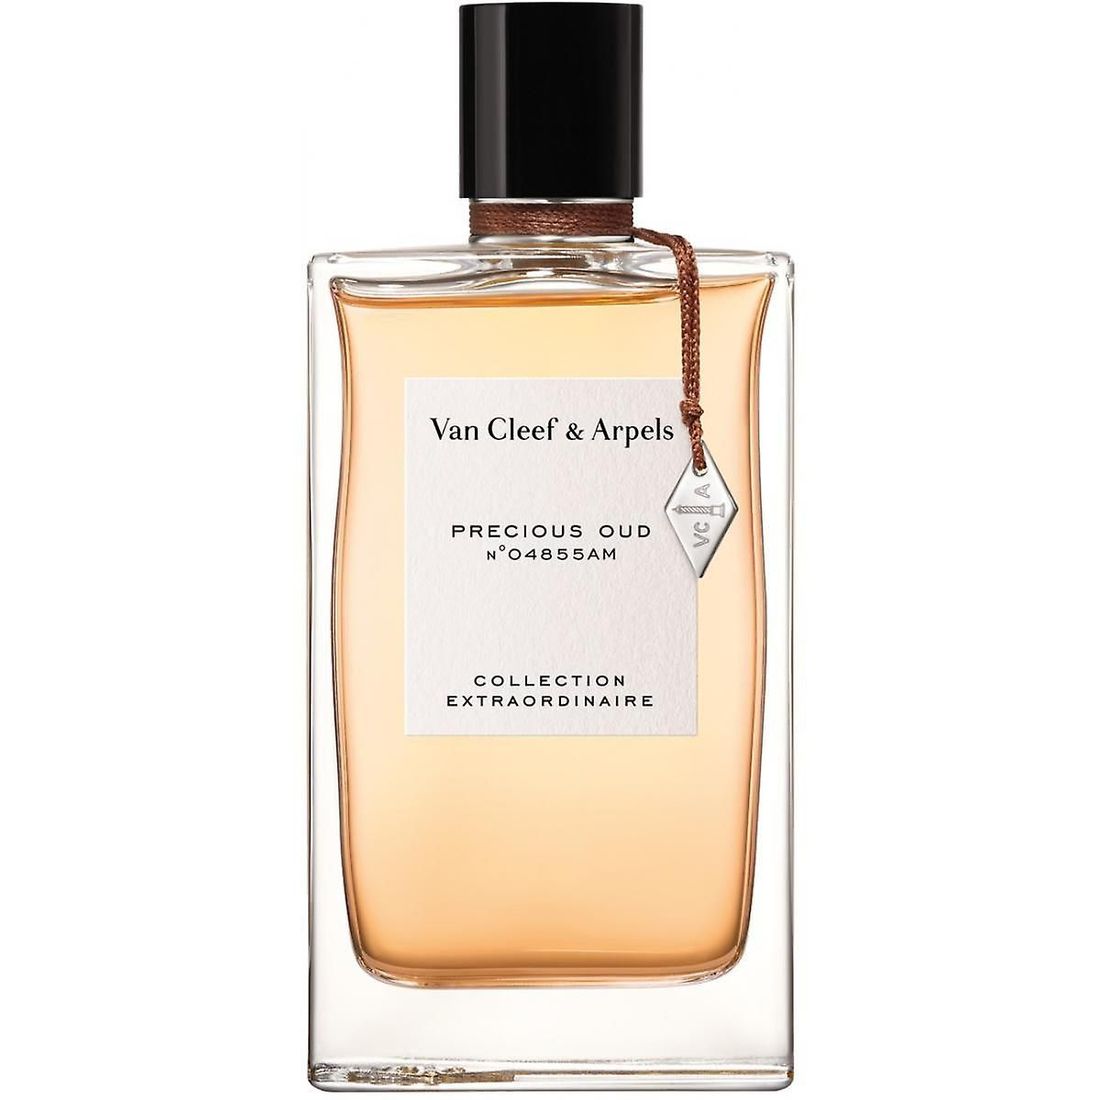 van cleef & arpels collection extraordinaire - precious oud woda perfumowana 75 ml   